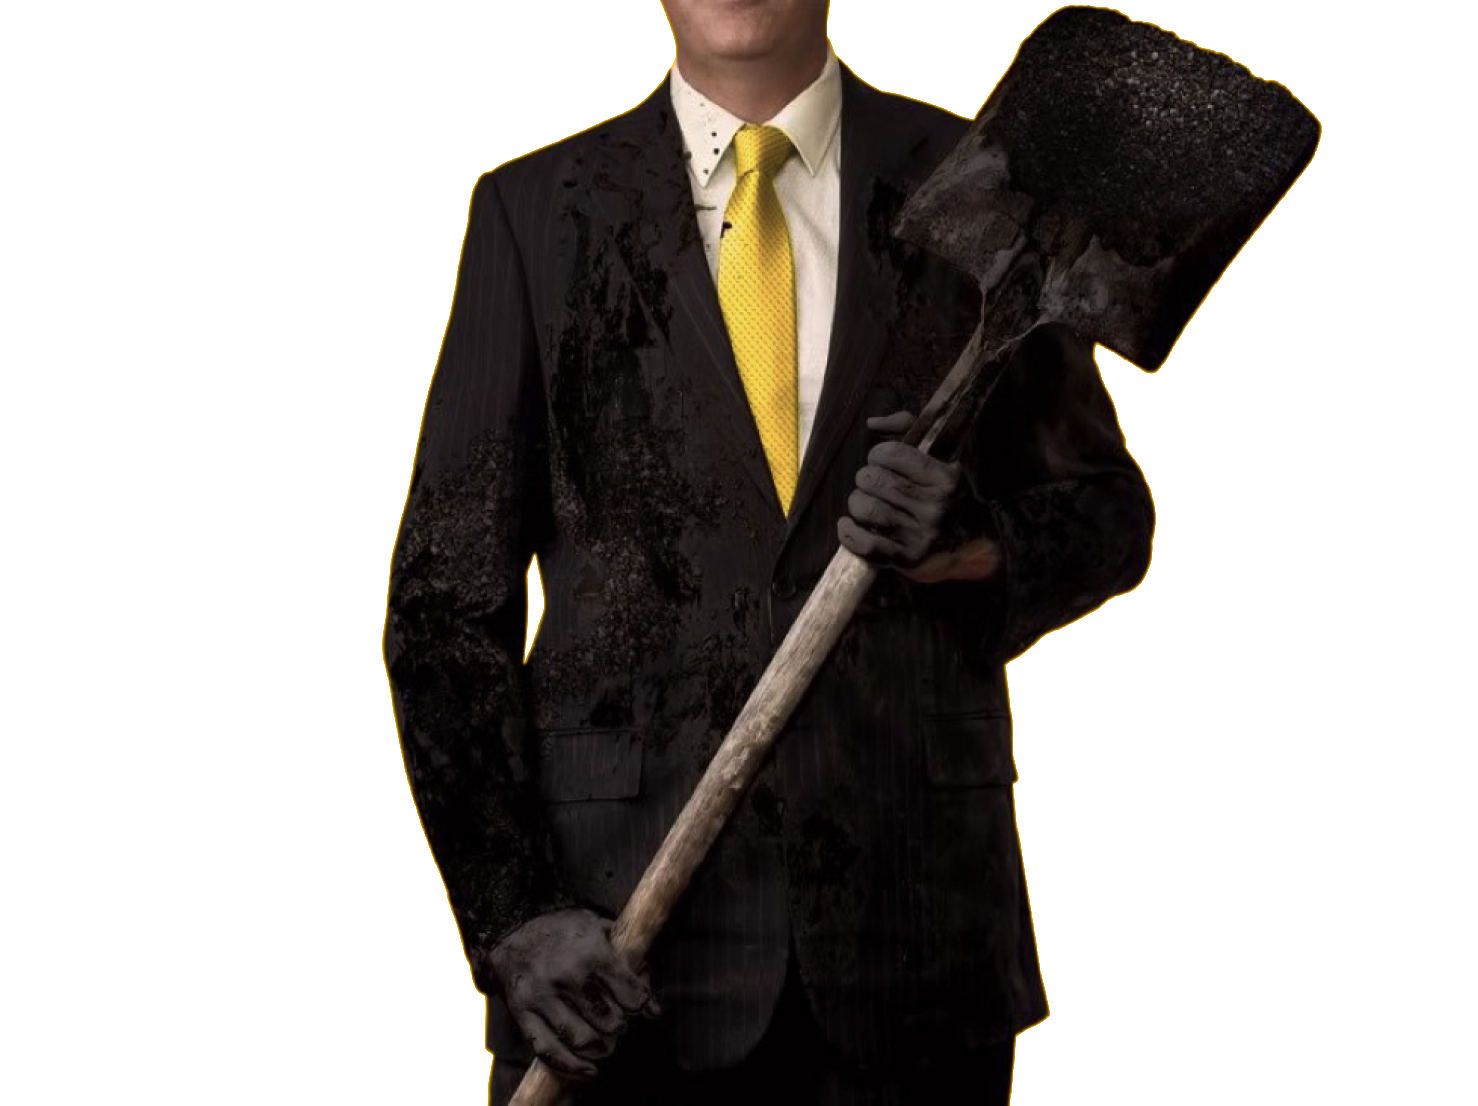 man in suite holding shovel